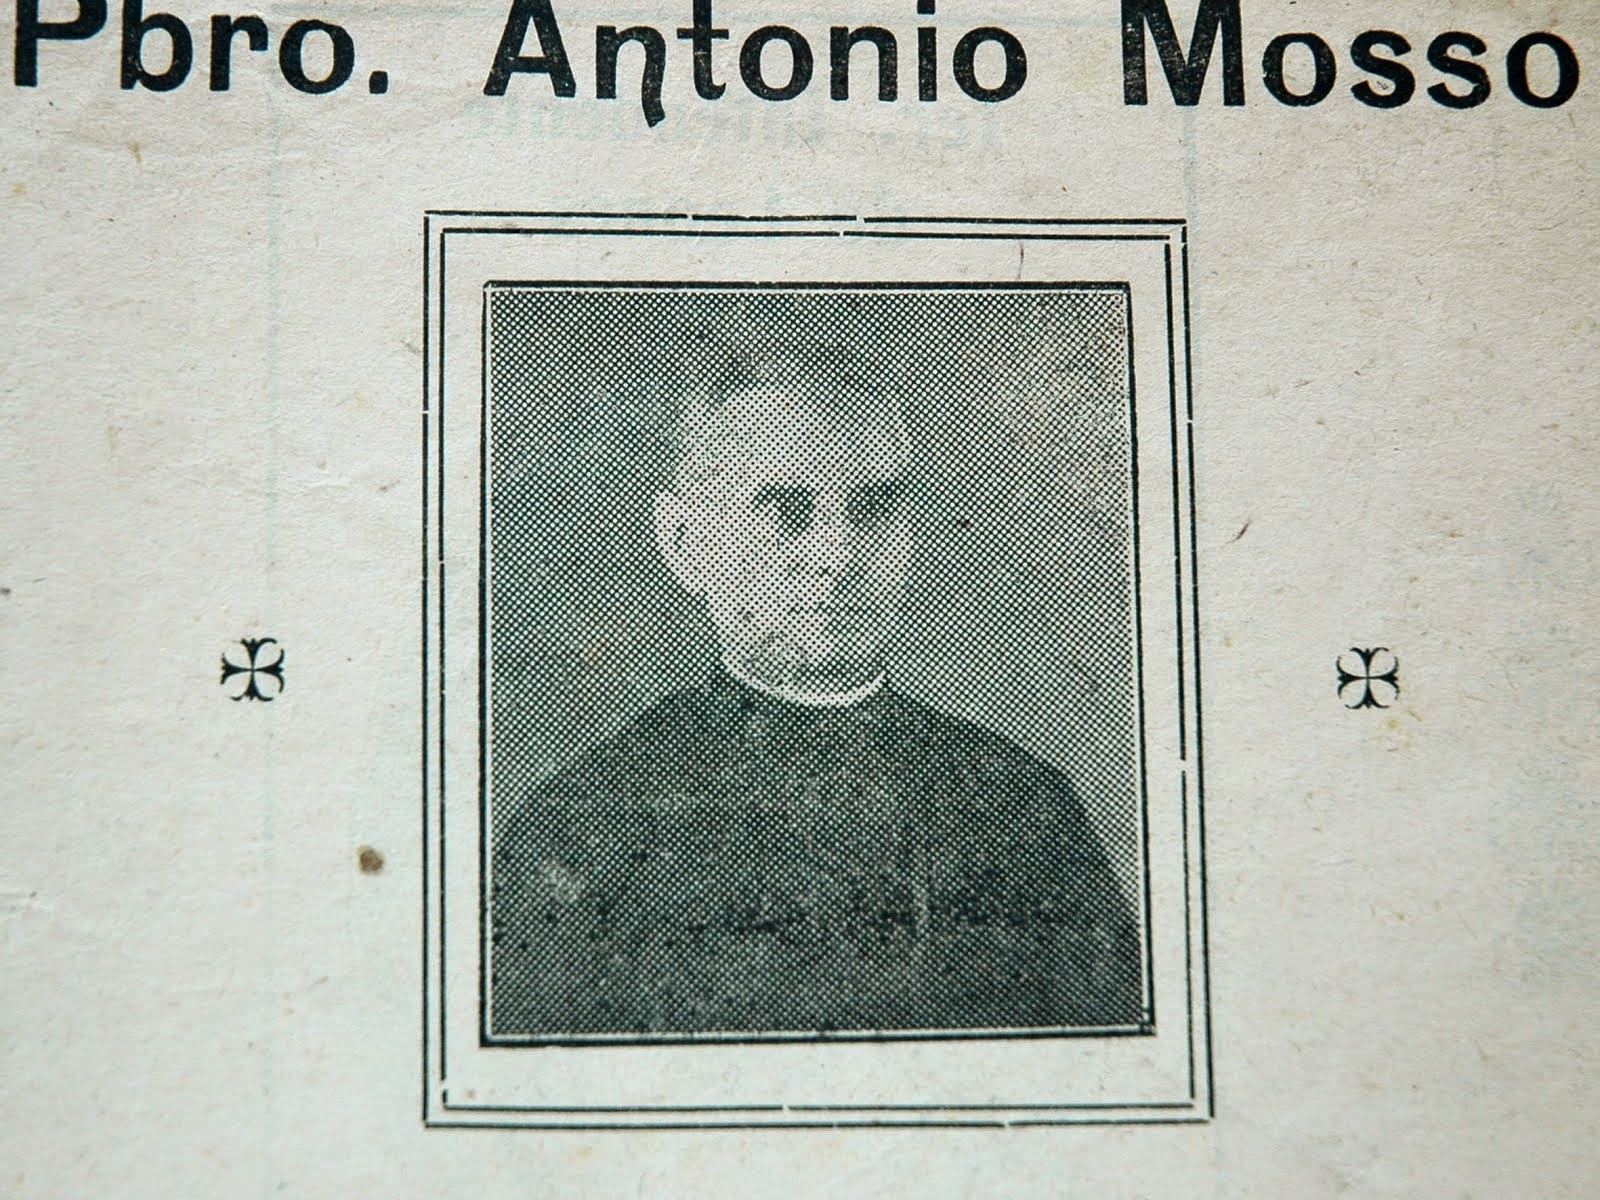 Pbro. Antonio Mosso